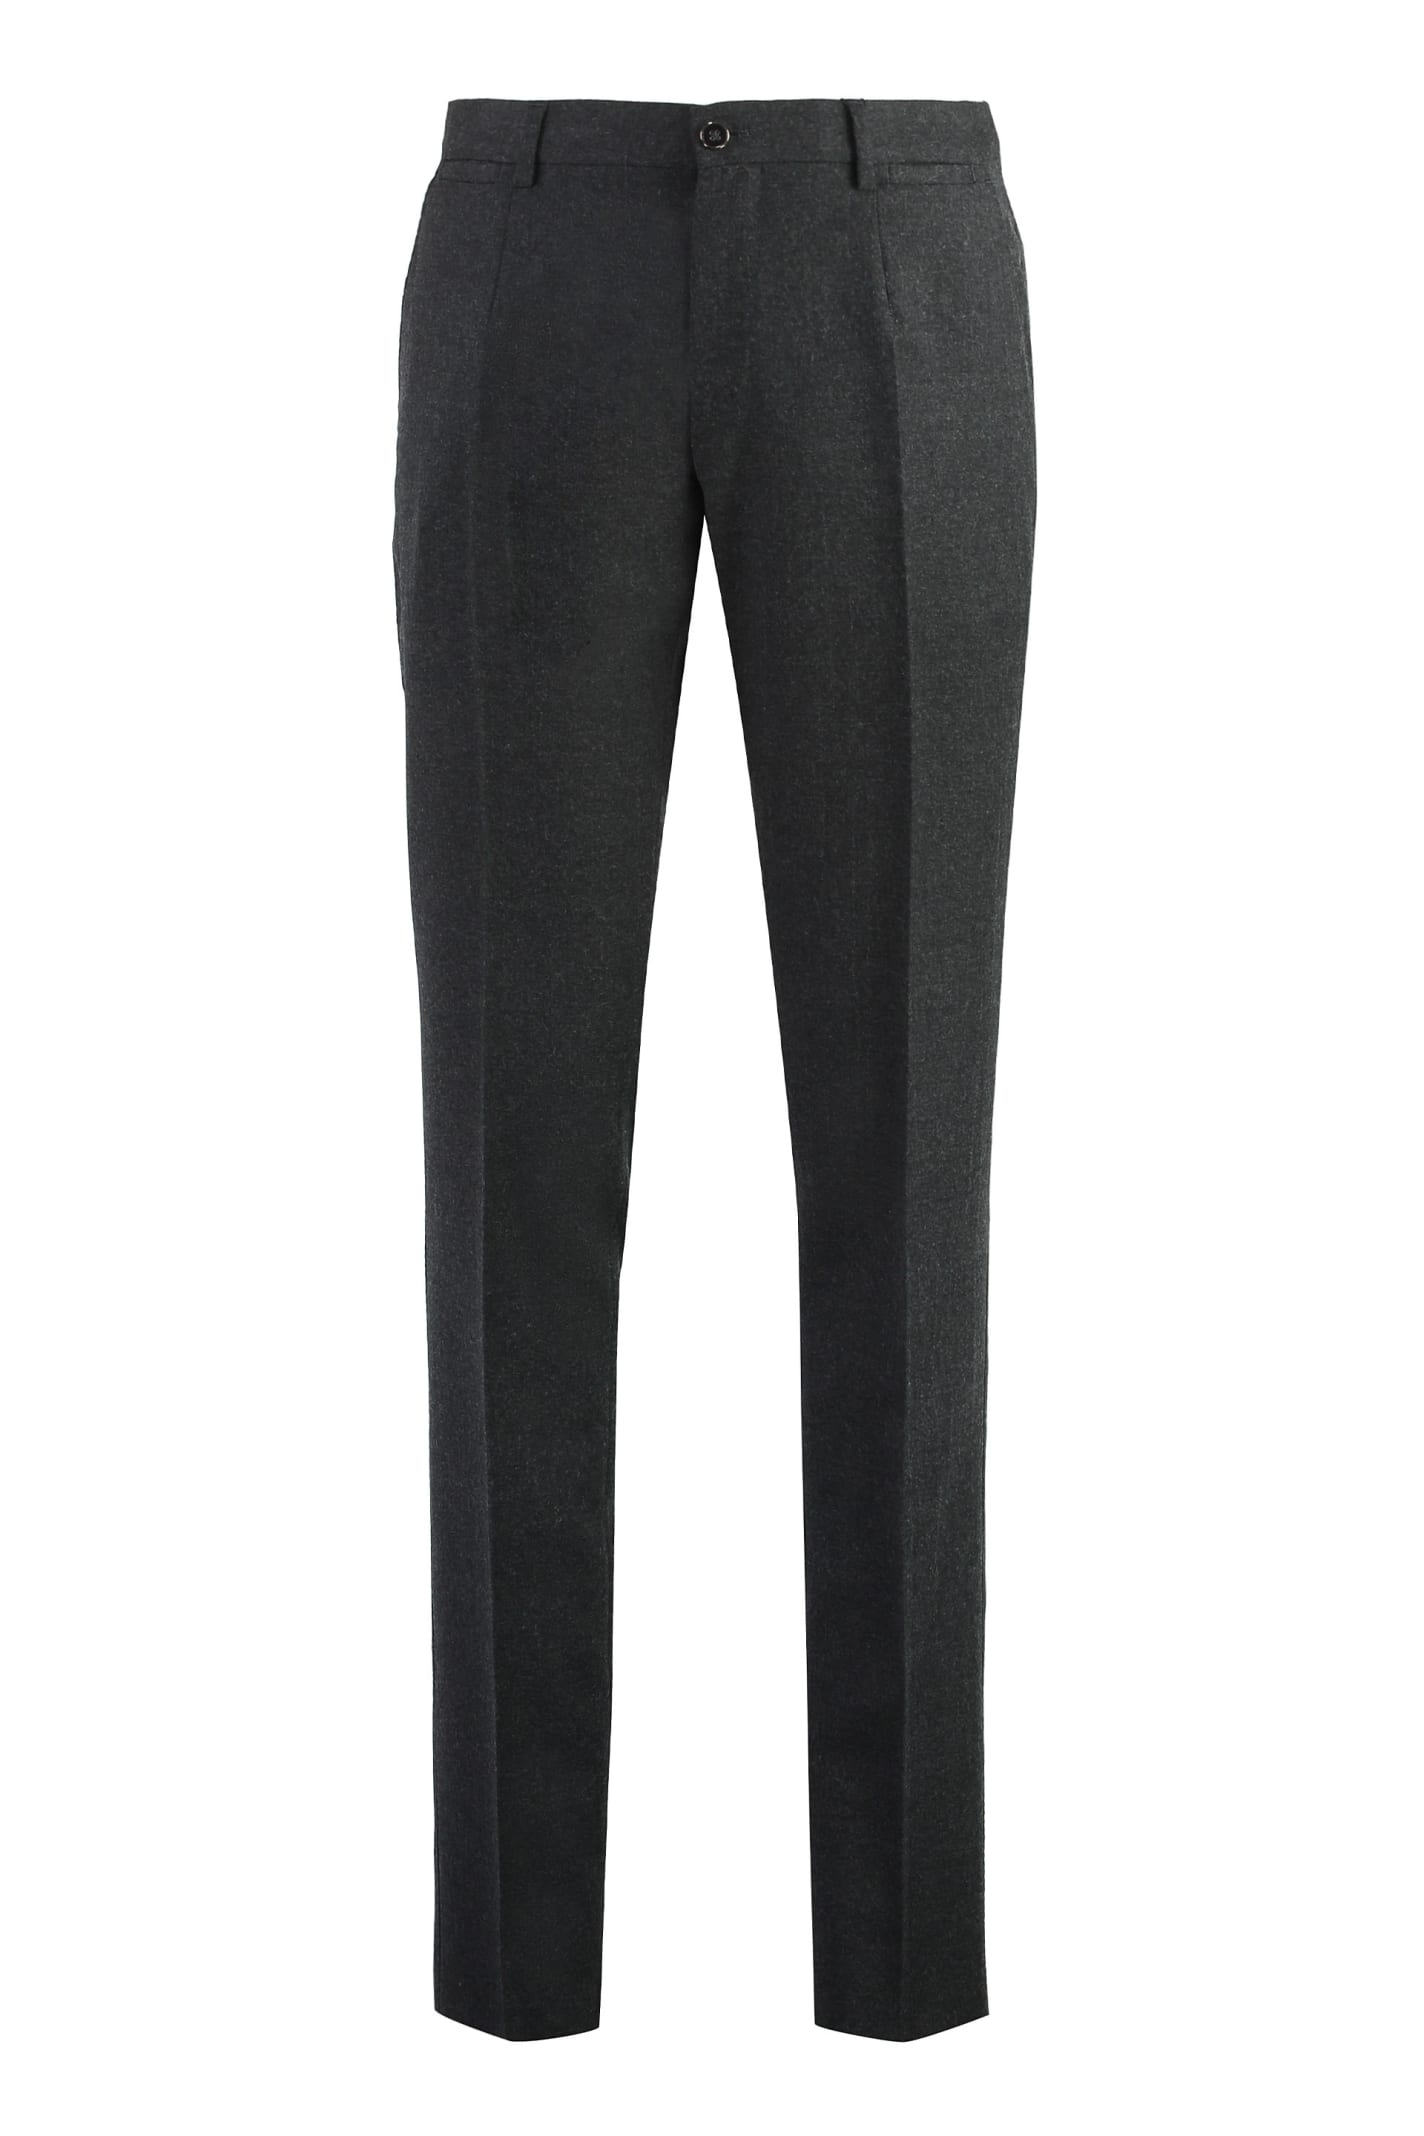 Dolce & Gabbana Stretch Wool Trousers In Grey